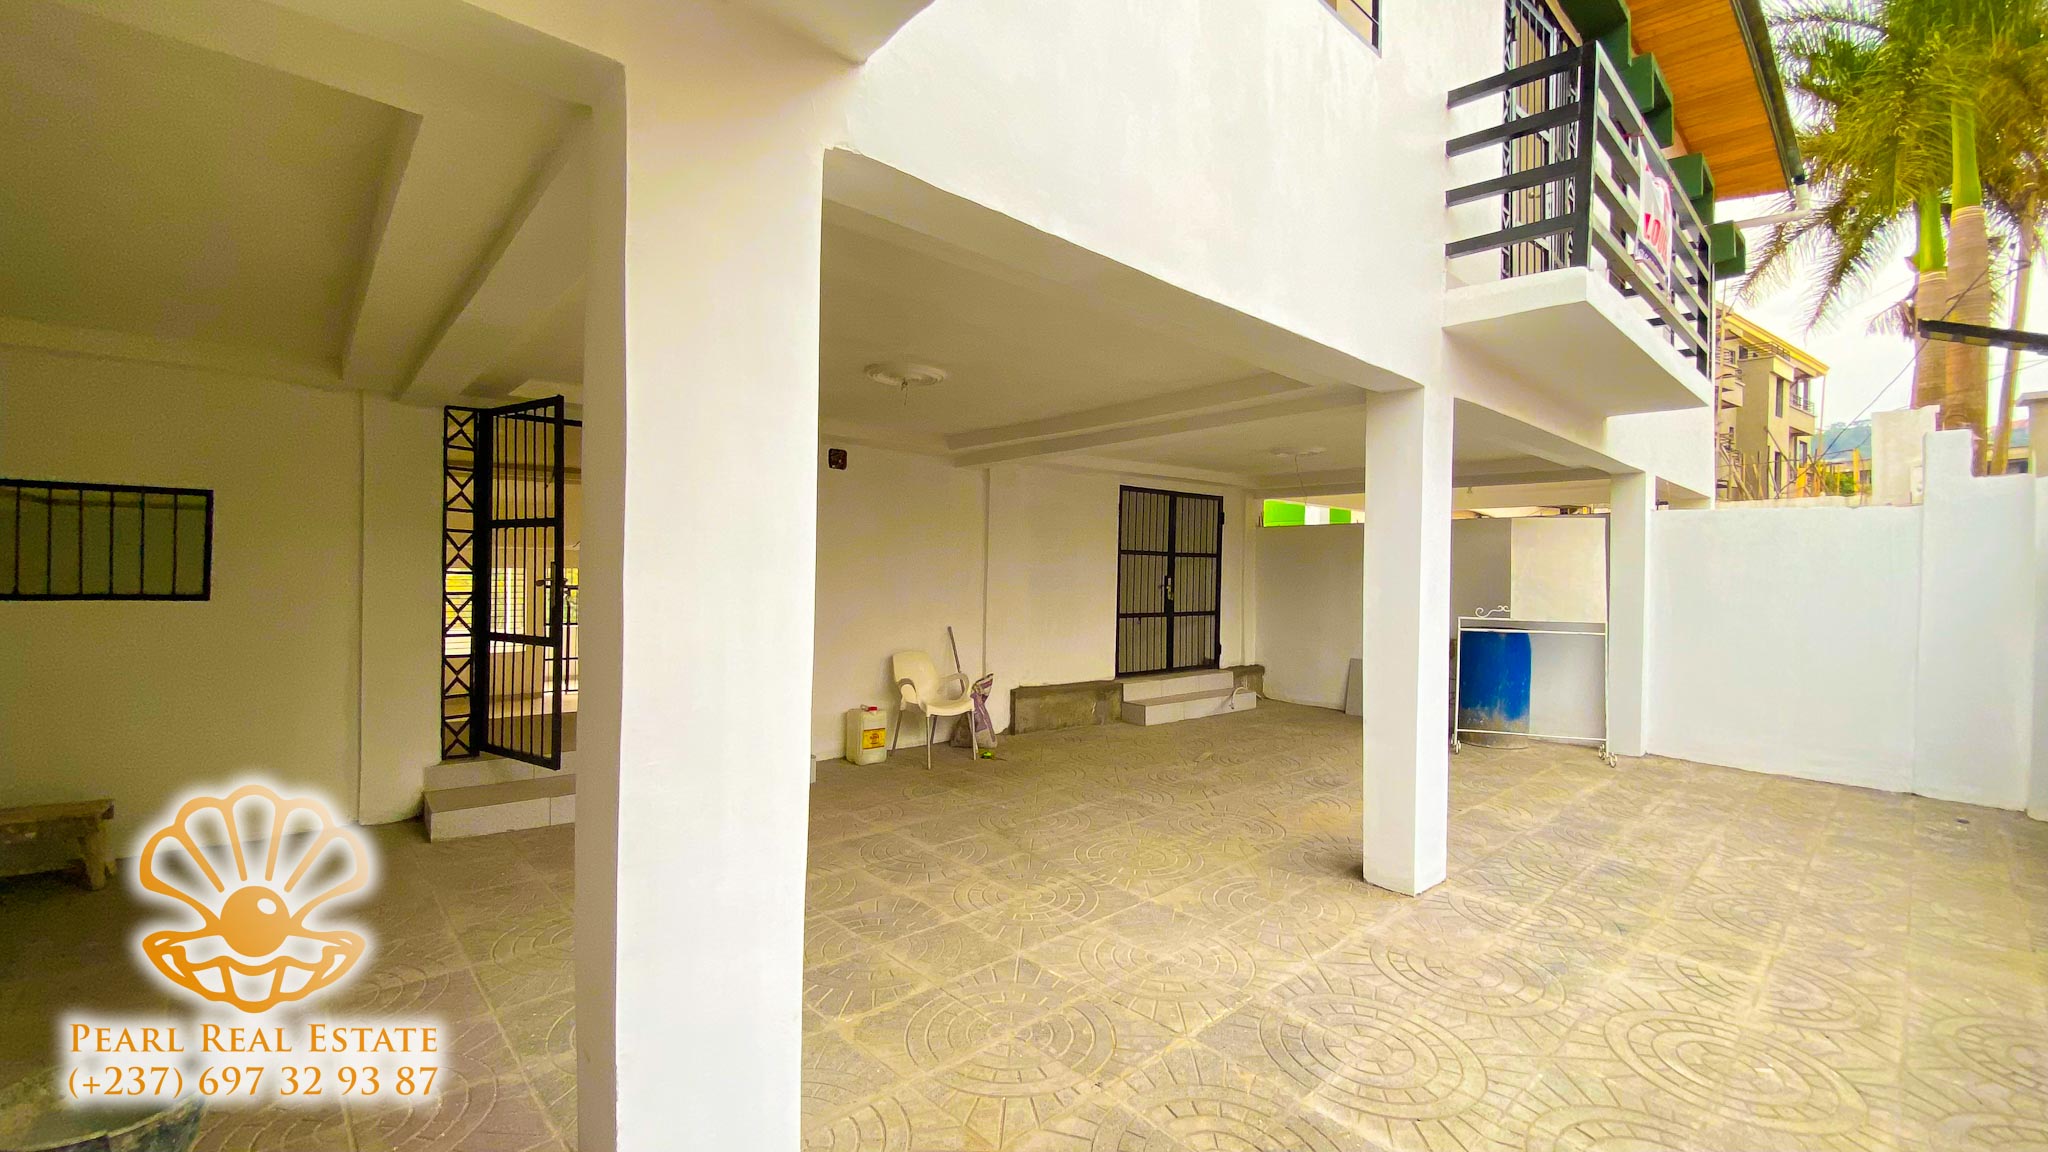 House (Villa) to rent - Yaoundé, Bastos, Golf - 1 living room(s), 3 bedroom(s), 2 bathroom(s) - 1 500 000 FCFA / month